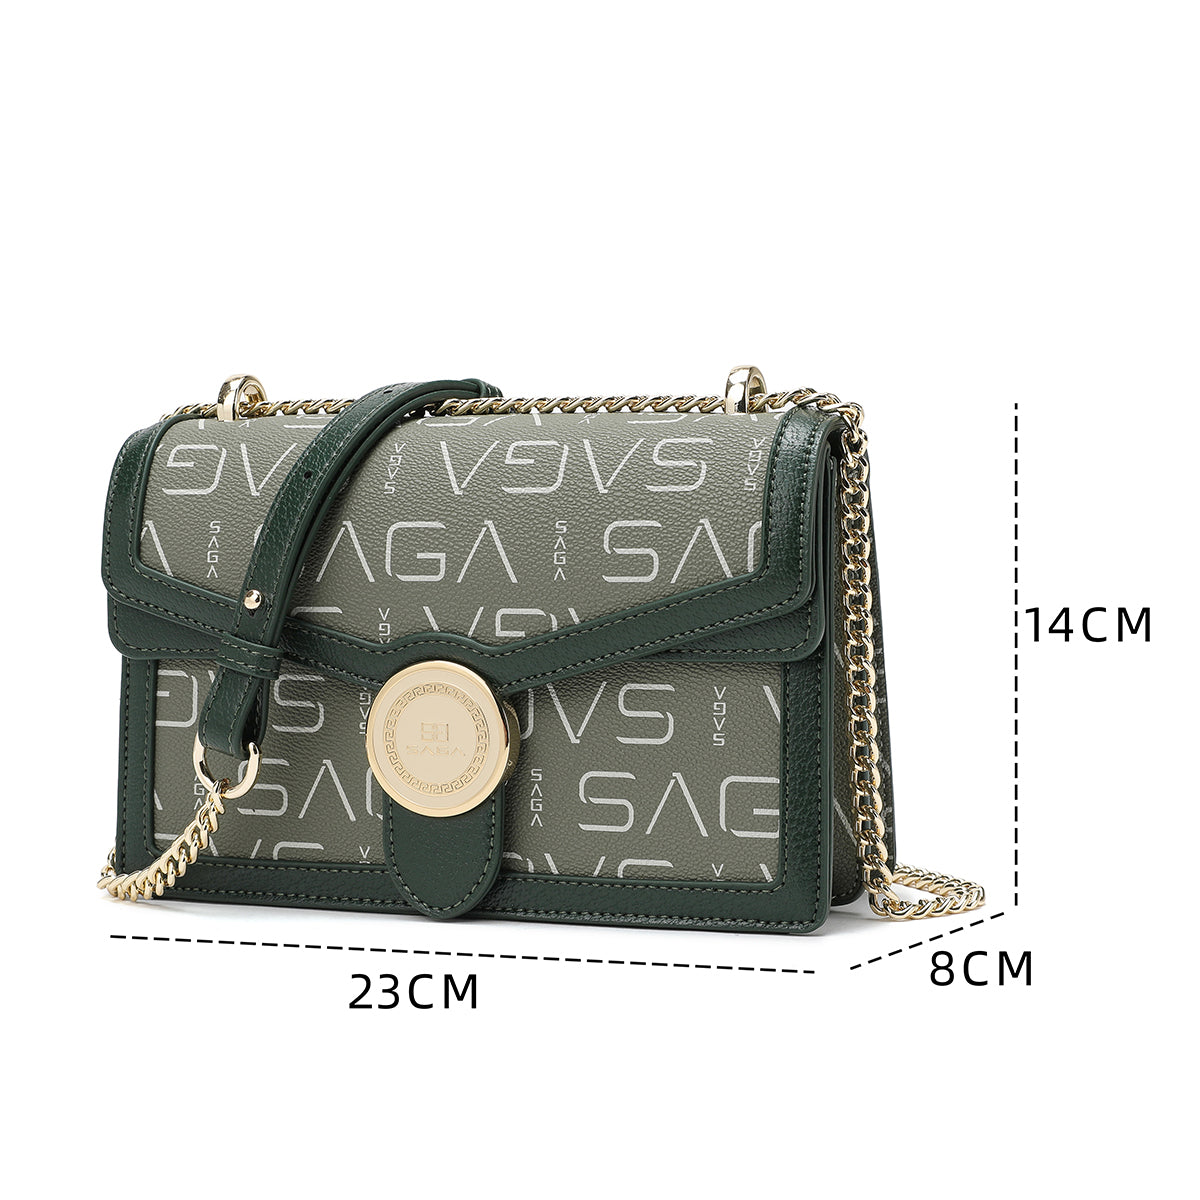 Luxury women's handbag with a modern design, width 23 cm, olive green color